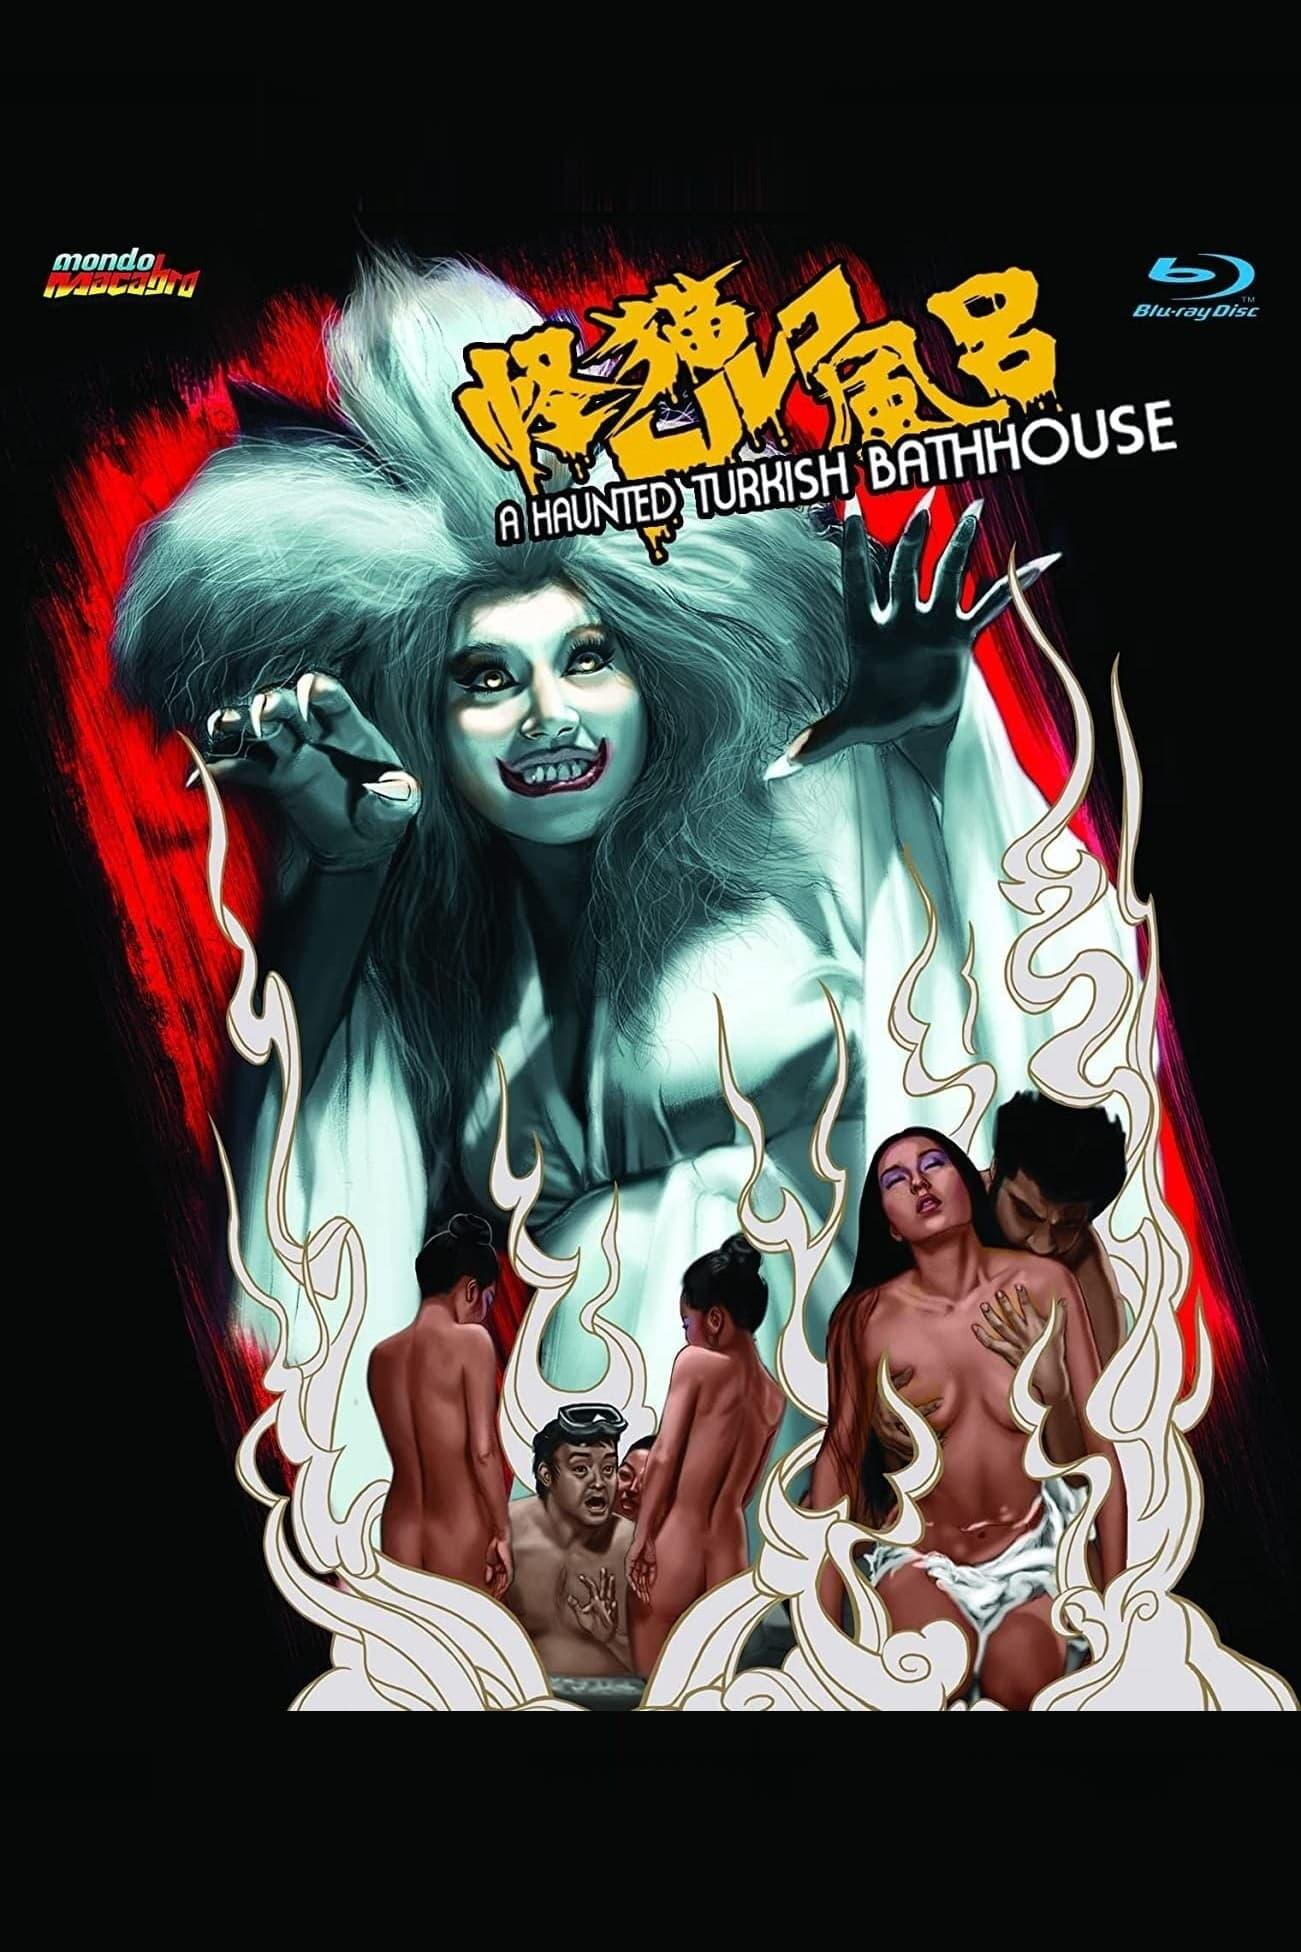 A Haunted Turkish Bathhouse poster